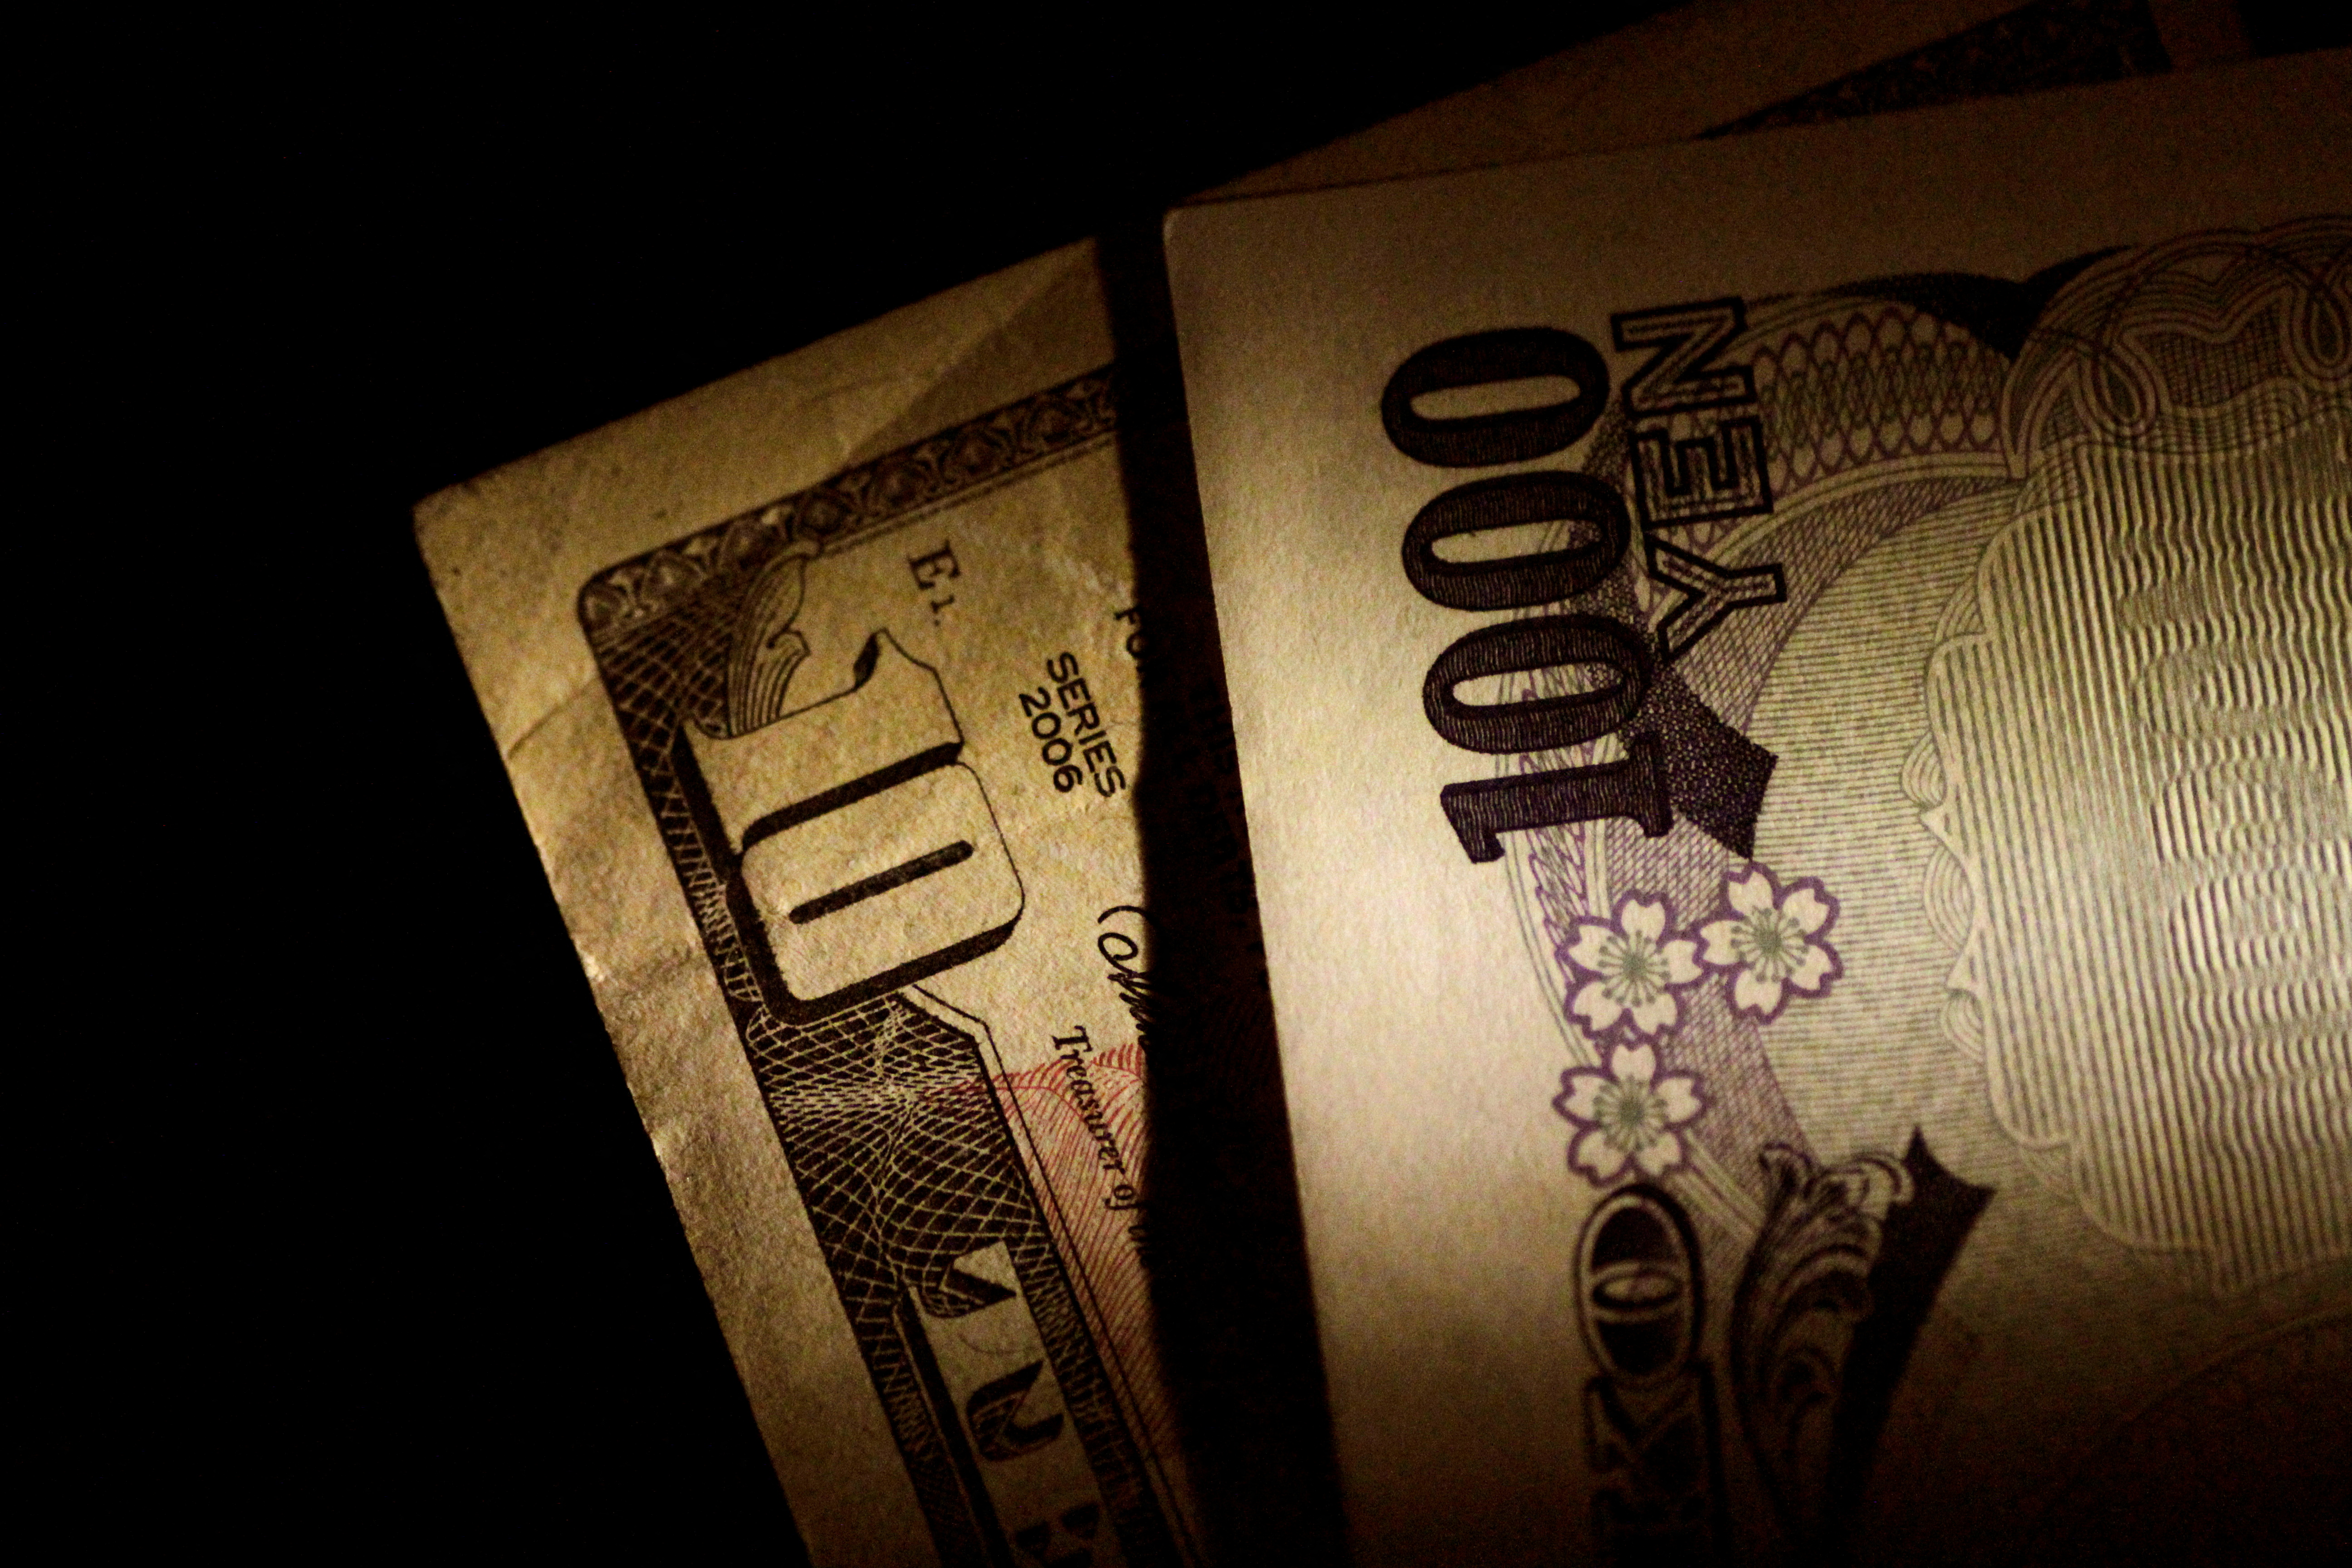 Illustration photo of Japan Yen and U.S. Dollar notes